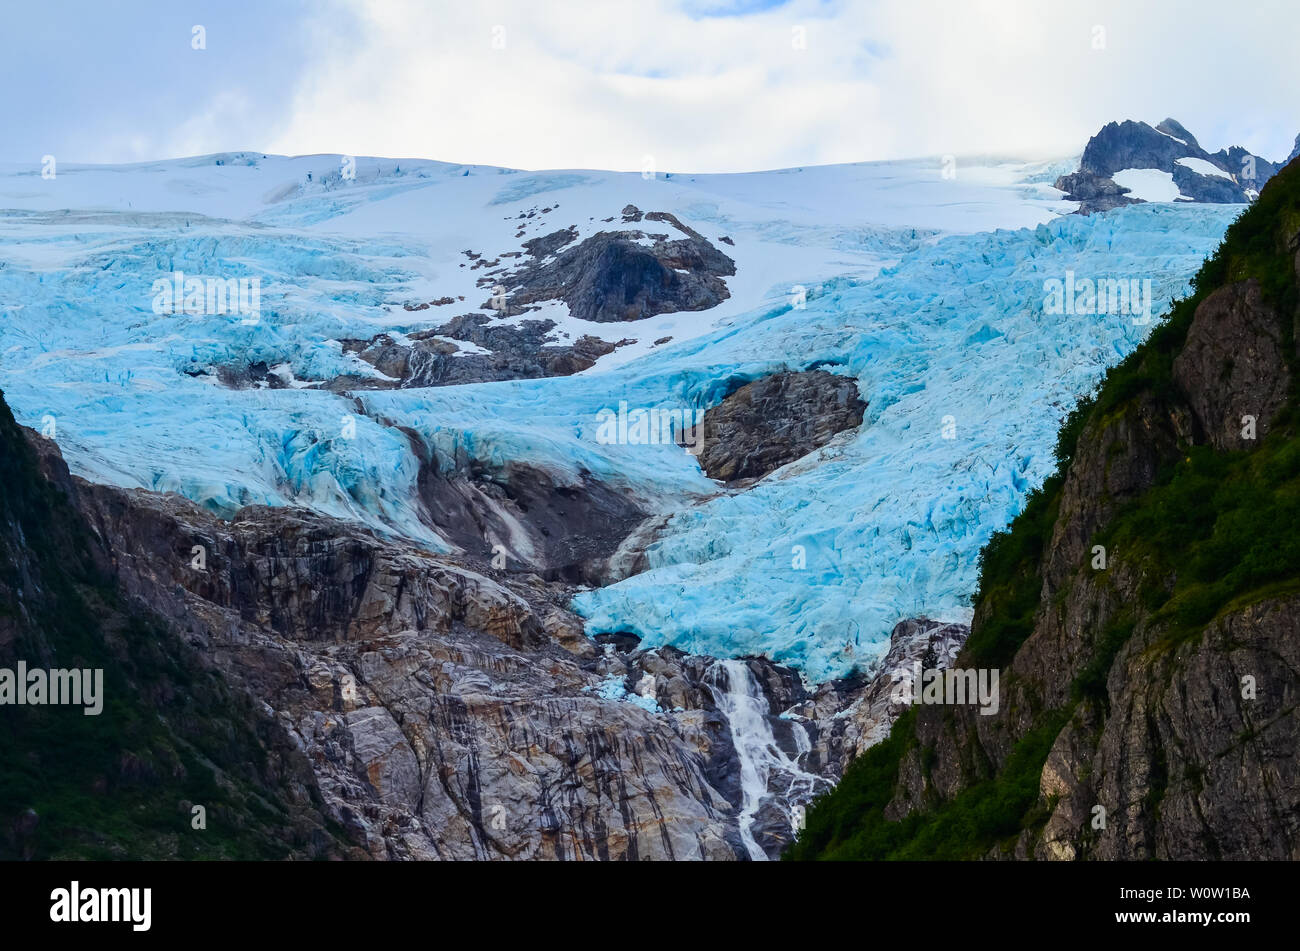 Close view of a glacier in Kenai fjords National Park, Seward, Alaska, United States, North America. Stock Photo